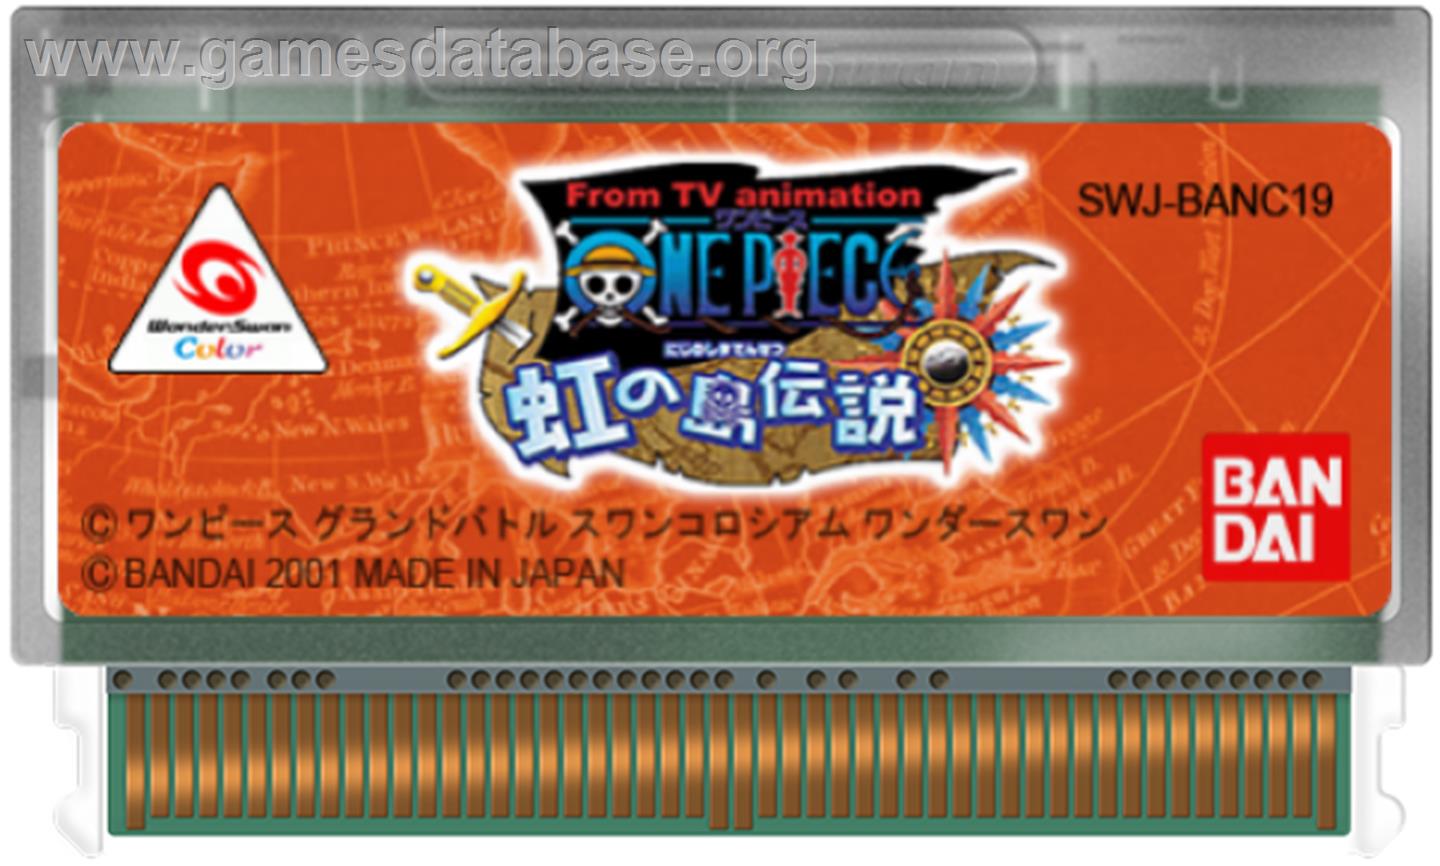 One Piece: Niji no Shima Densetsu - Bandai WonderSwan Color - Artwork - Cartridge